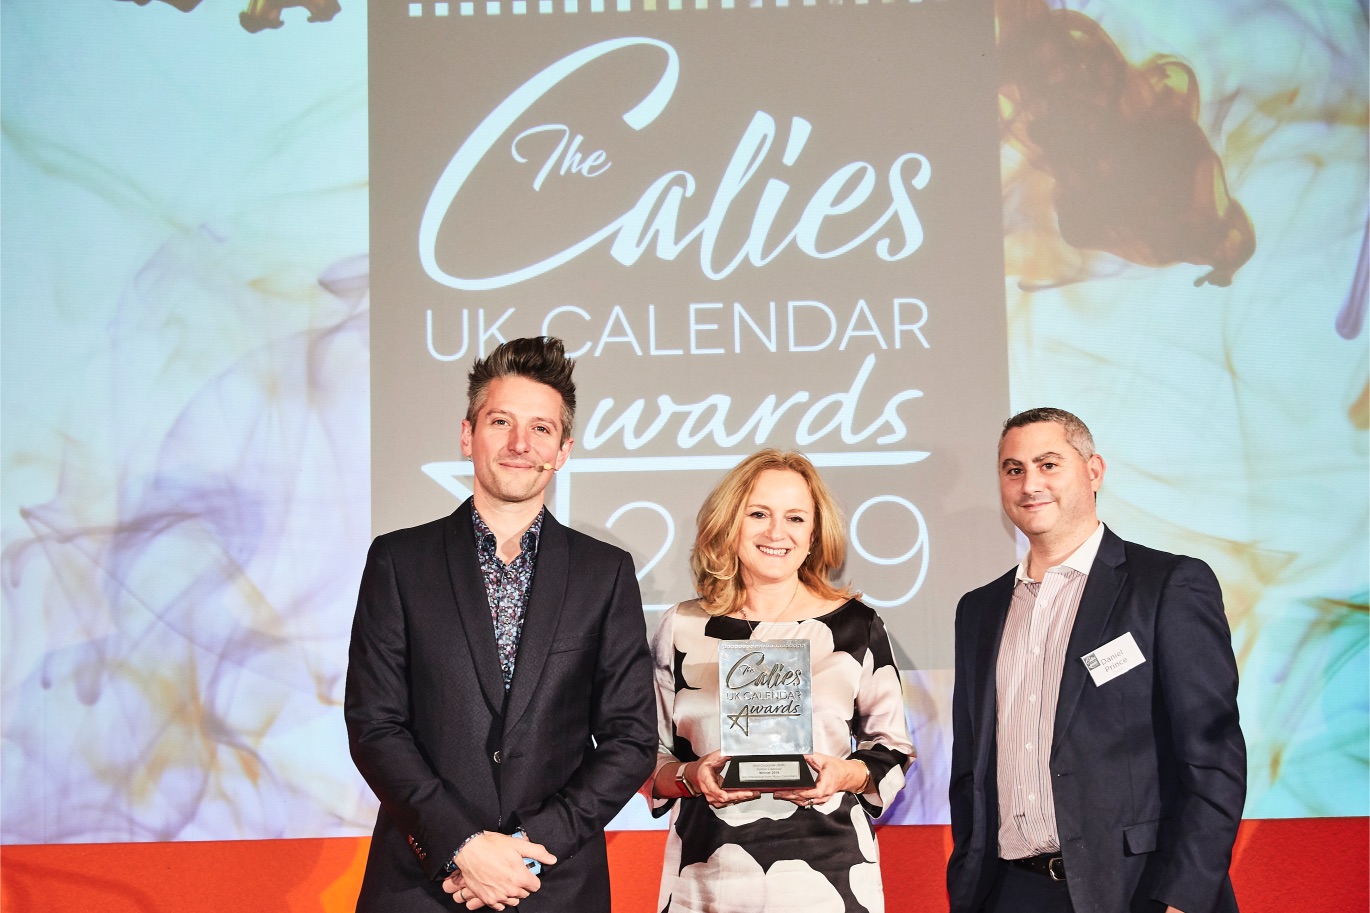 Above: Elizabeth Rose, marketing manager of Rose Calendars received the award from Danilo’s managing director, Daniel Prince.